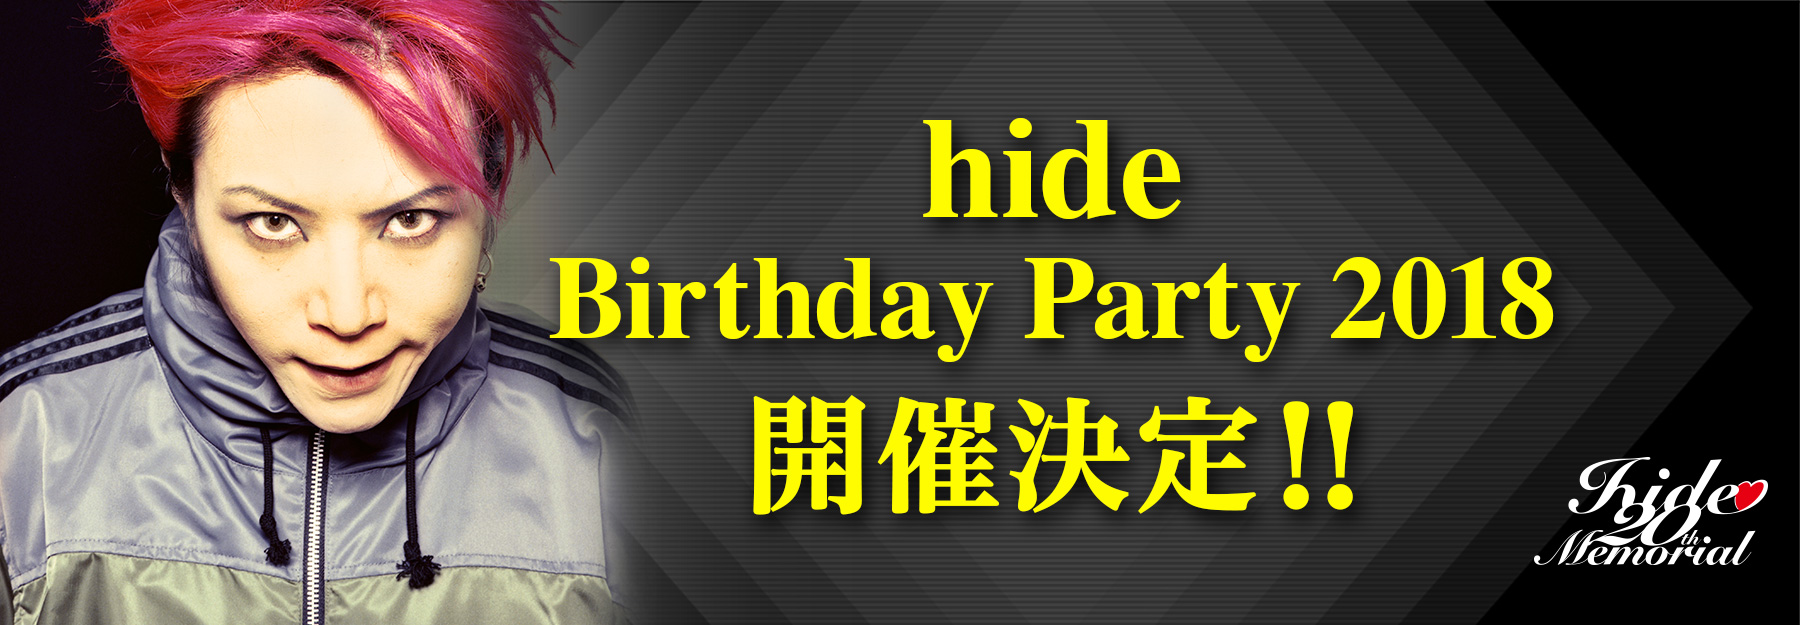 hide Birthday Party 2018